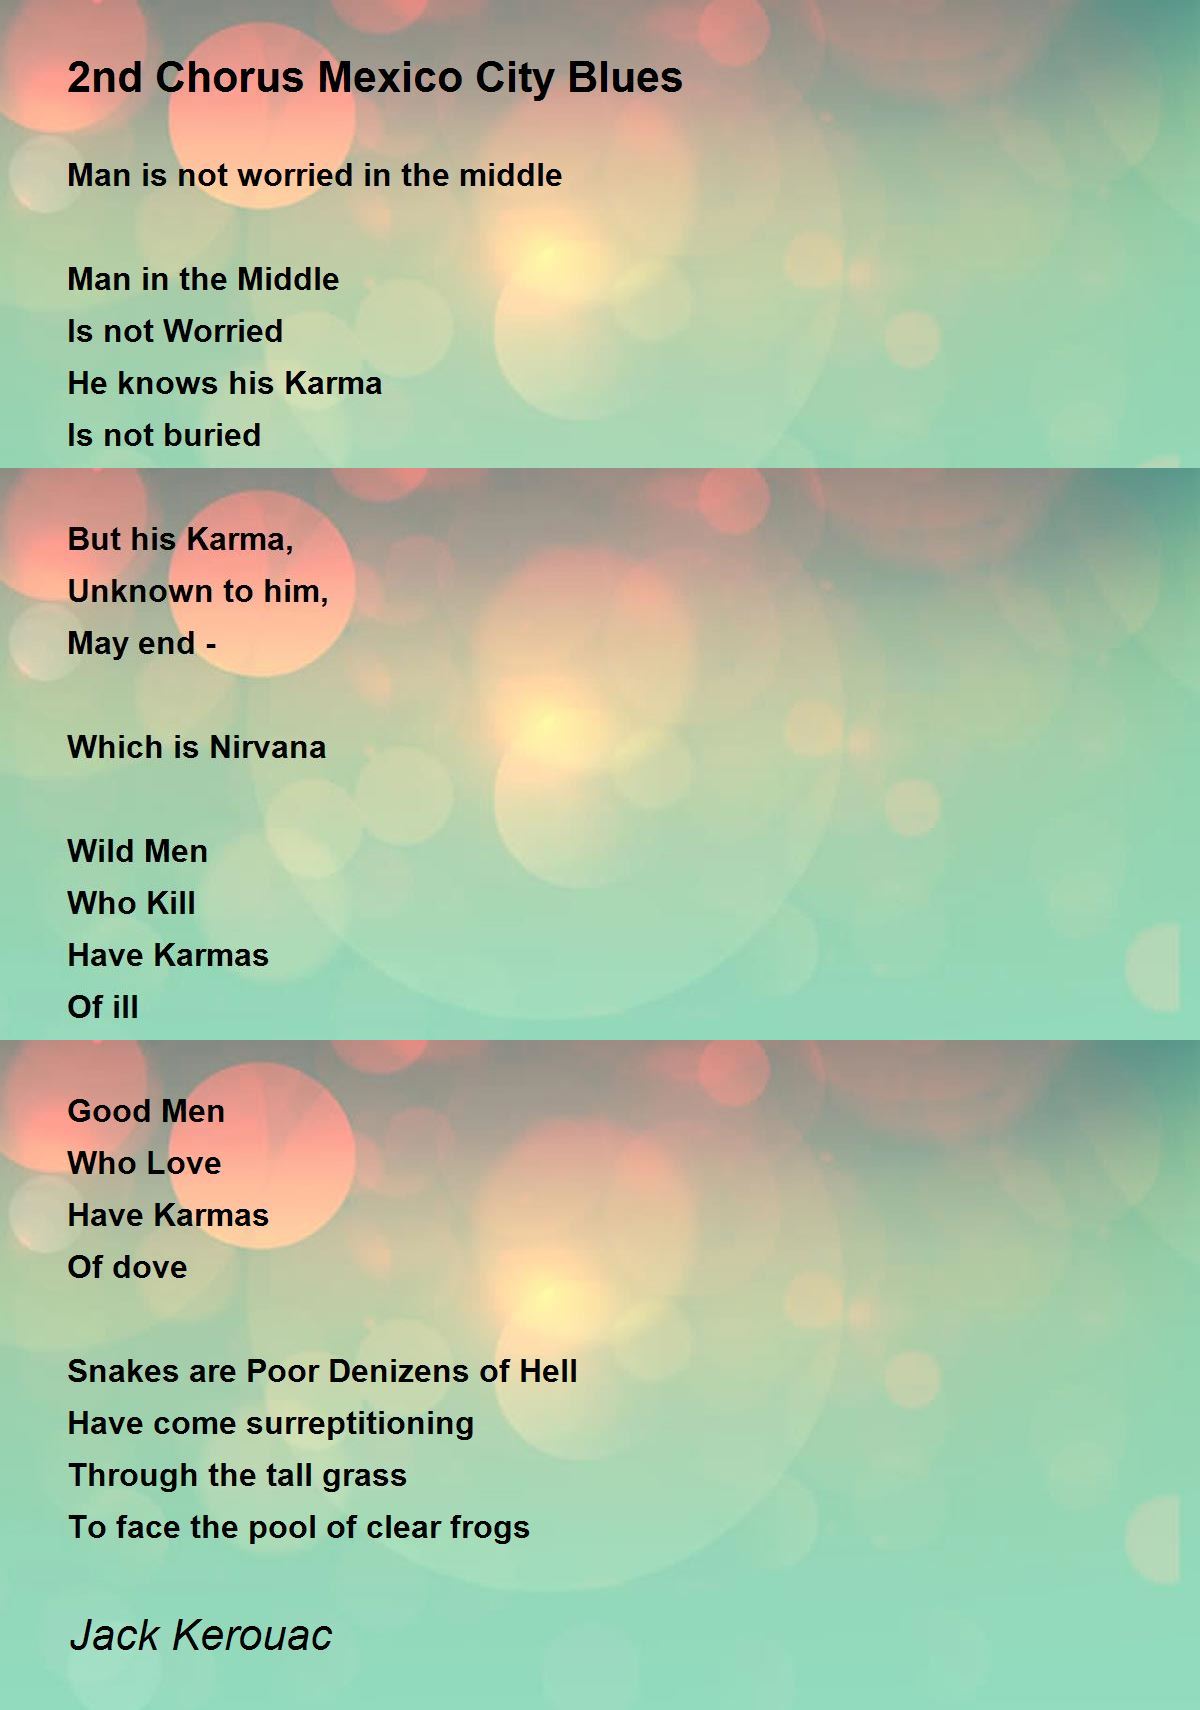 2nd Chorus Mexico City Blues Poem by Jack Kerouac - Poem 